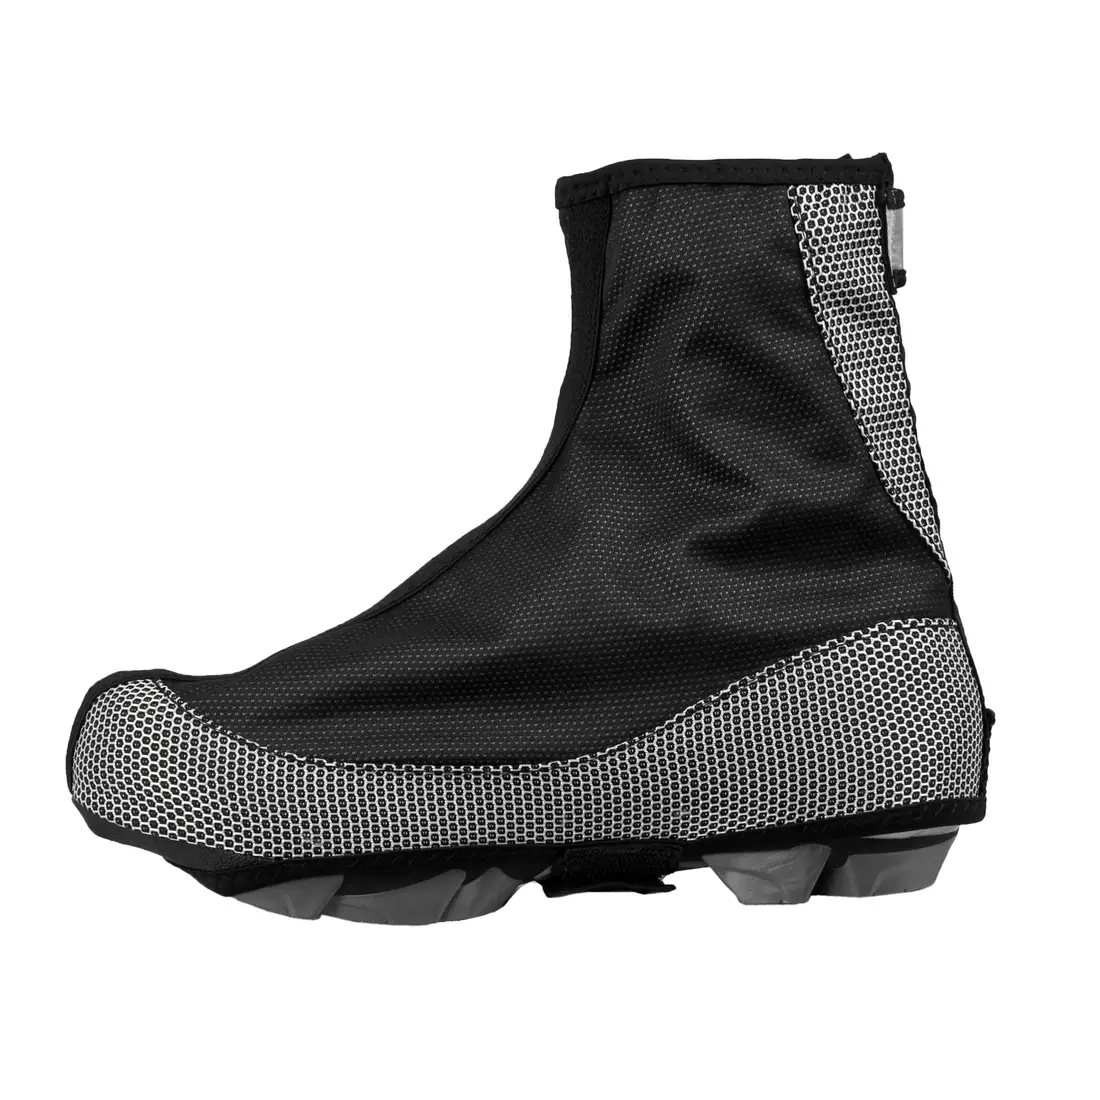 FORCE WINDSTER MTB - 90589 - MTB shoe covers, membrane